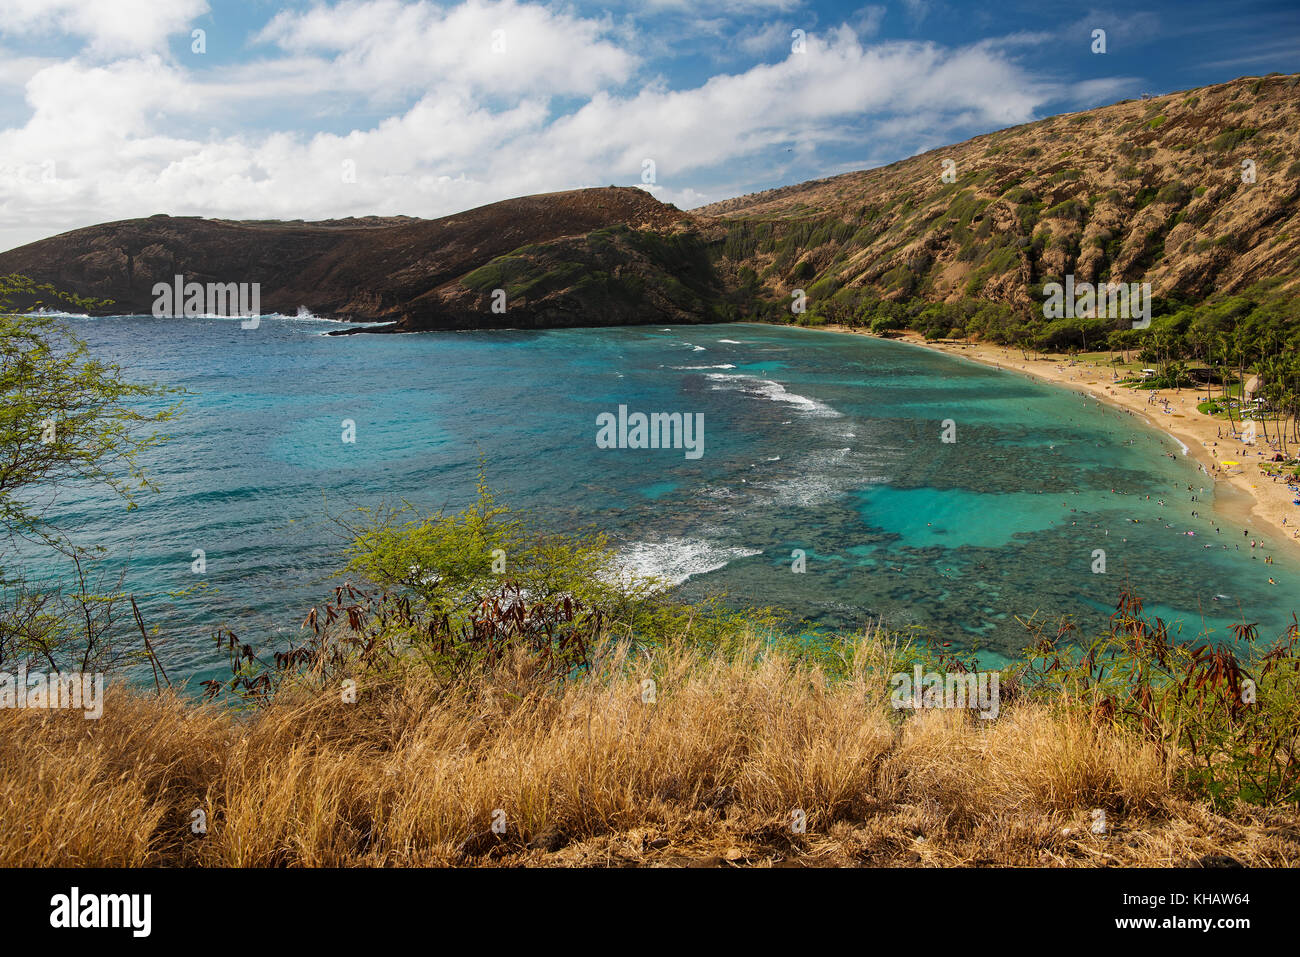 View across Hanauma Bay, a Nature Preserve on O'ahu Island, Hawai'i. Stock Photo